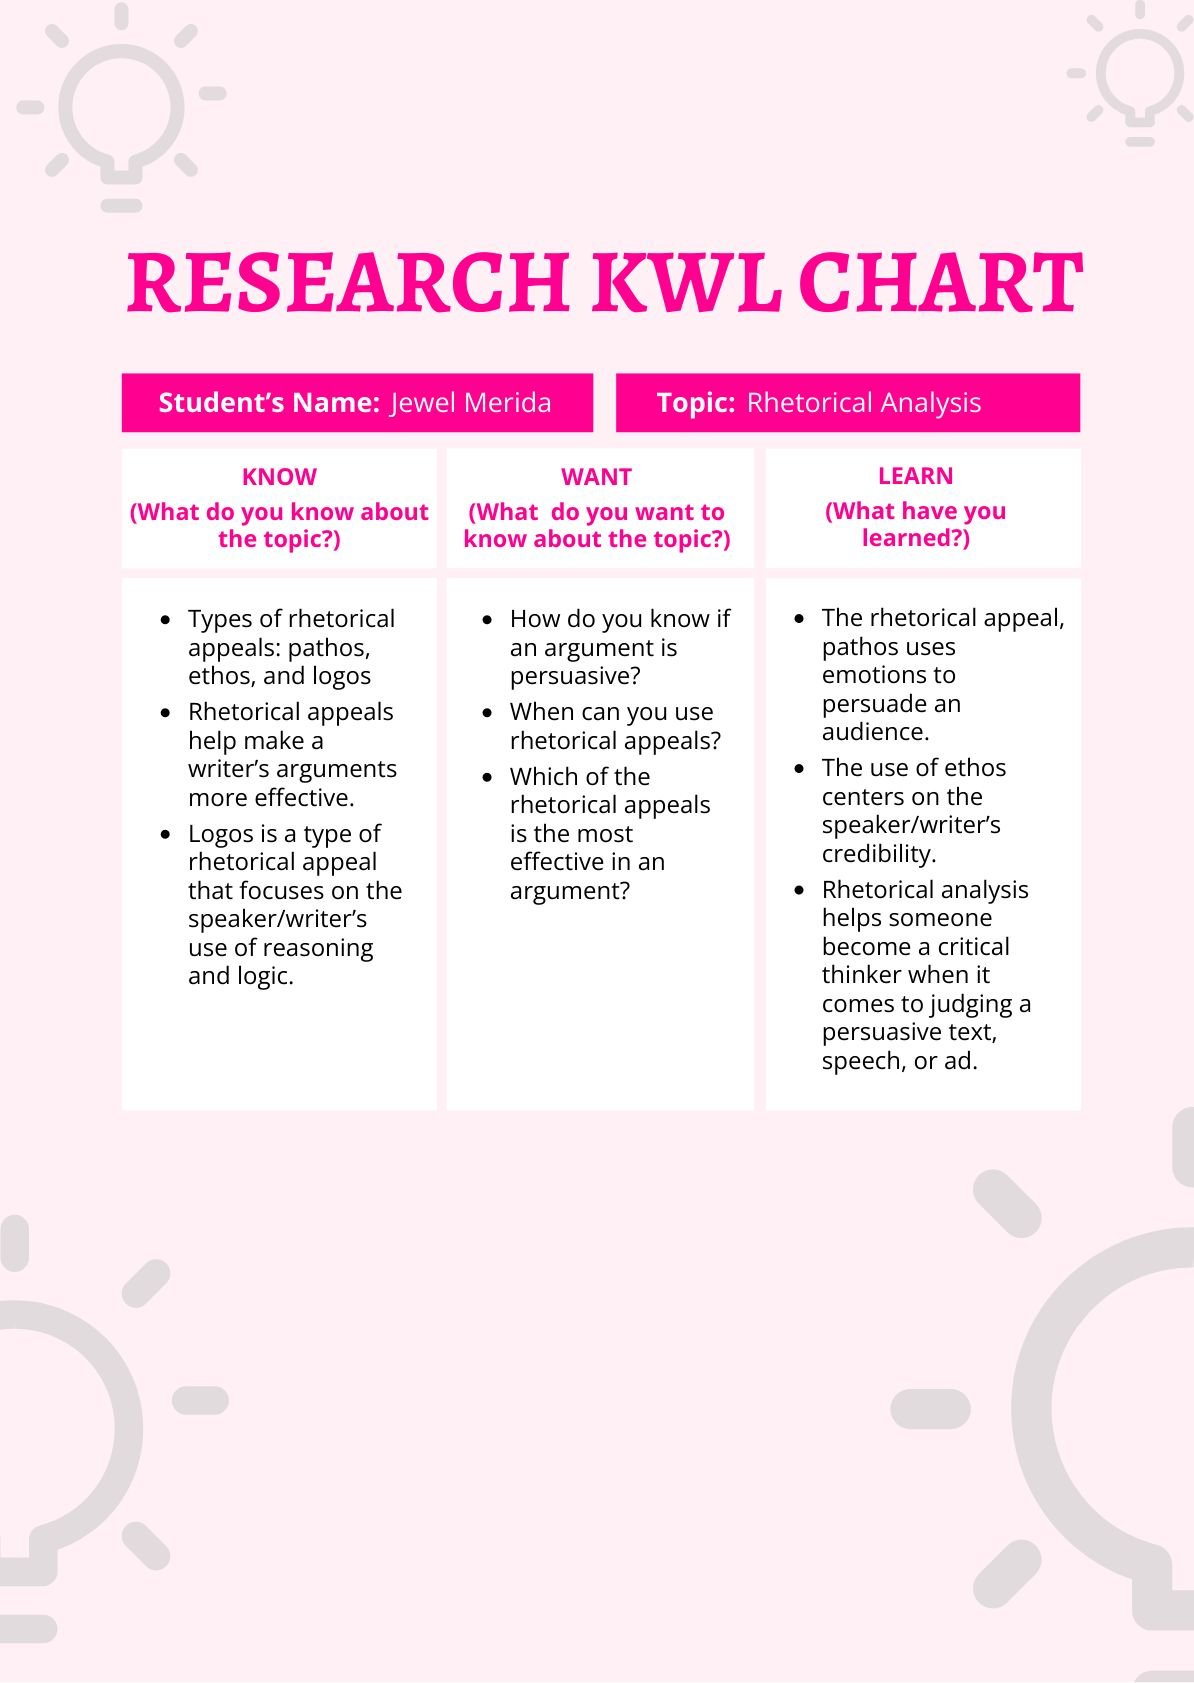 Free Research KWL Chart